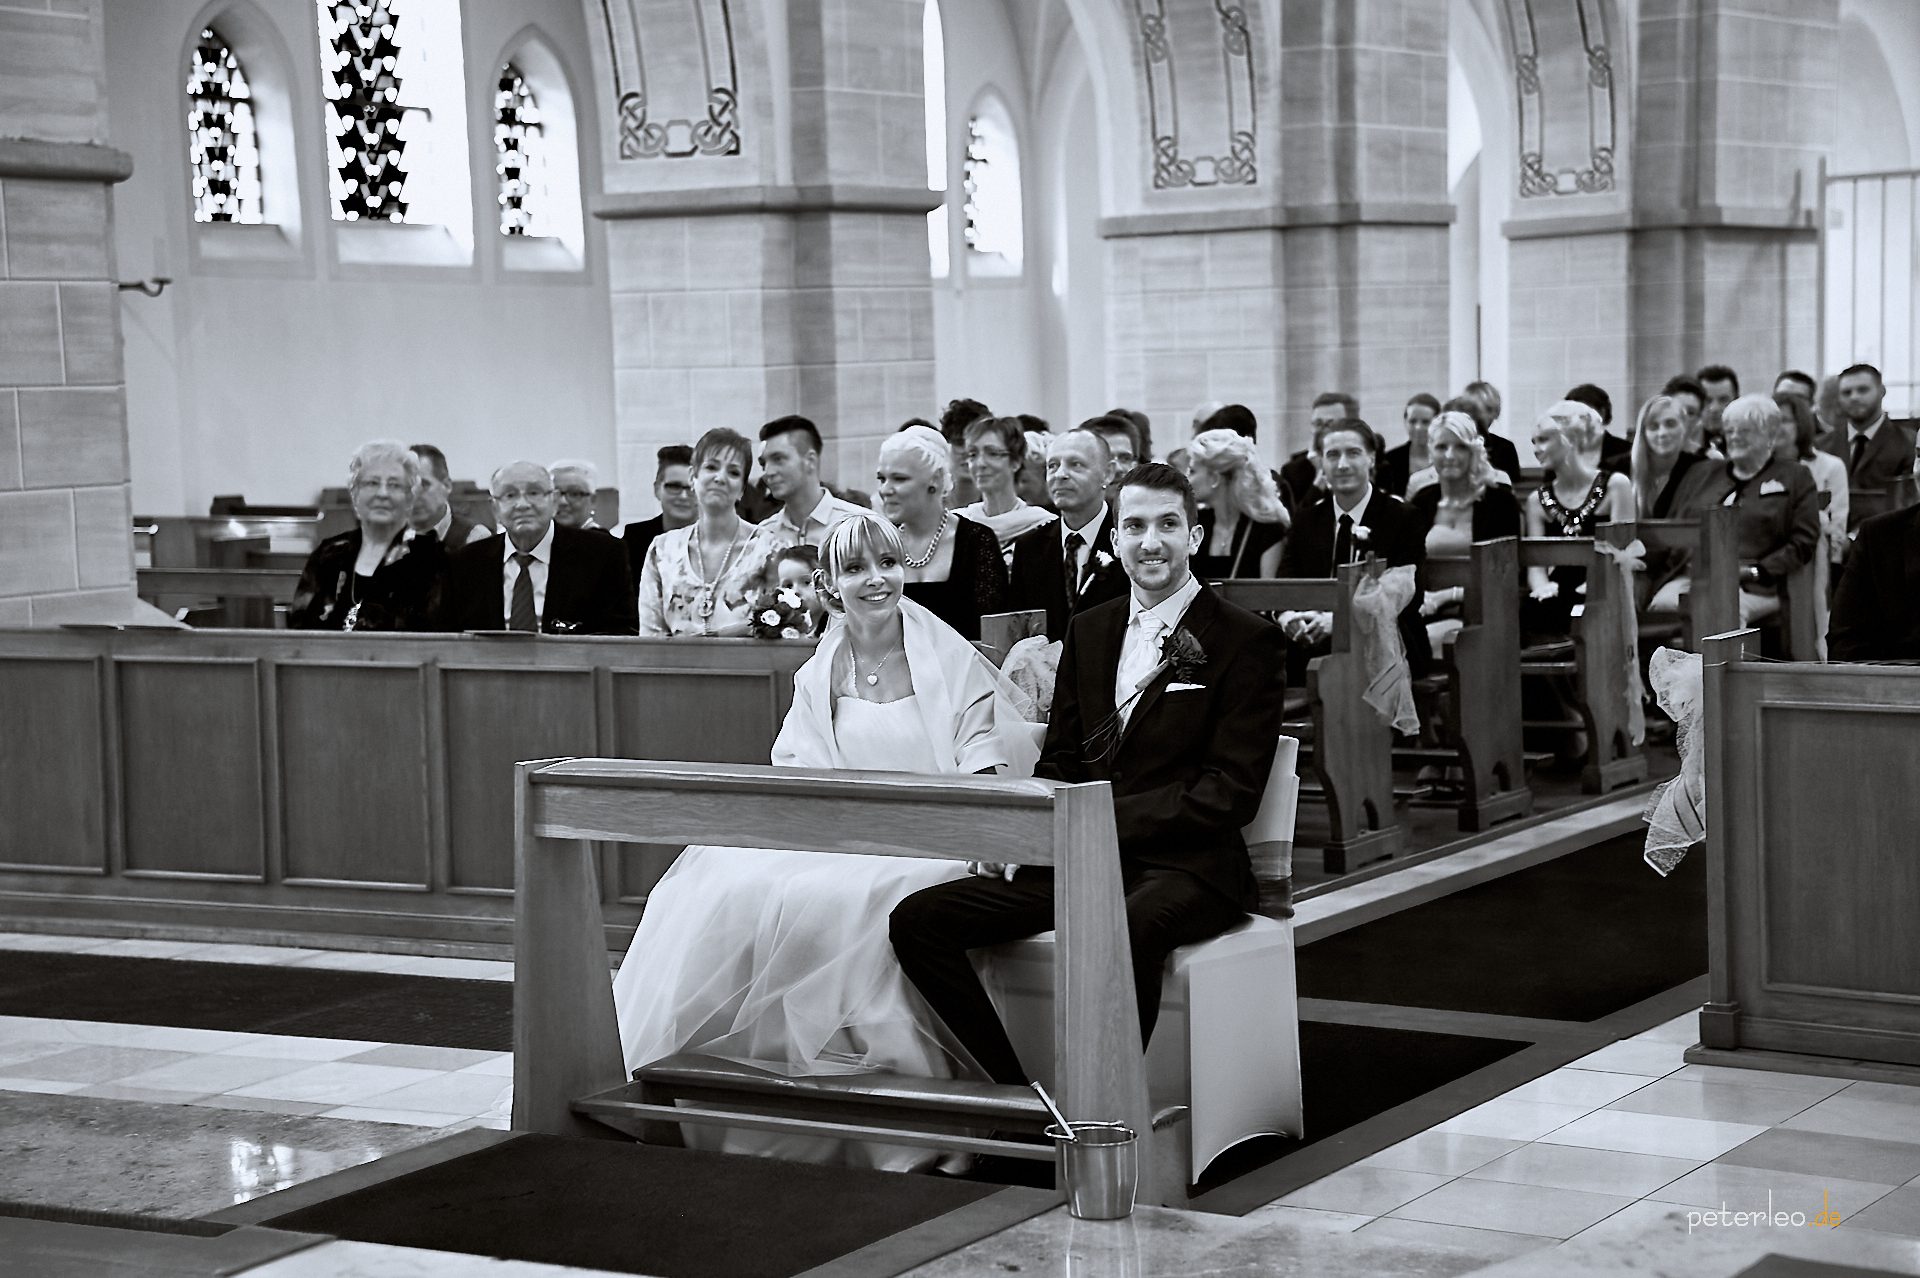 Hochzeit hochzeitsfotograf leo photoart peterleo